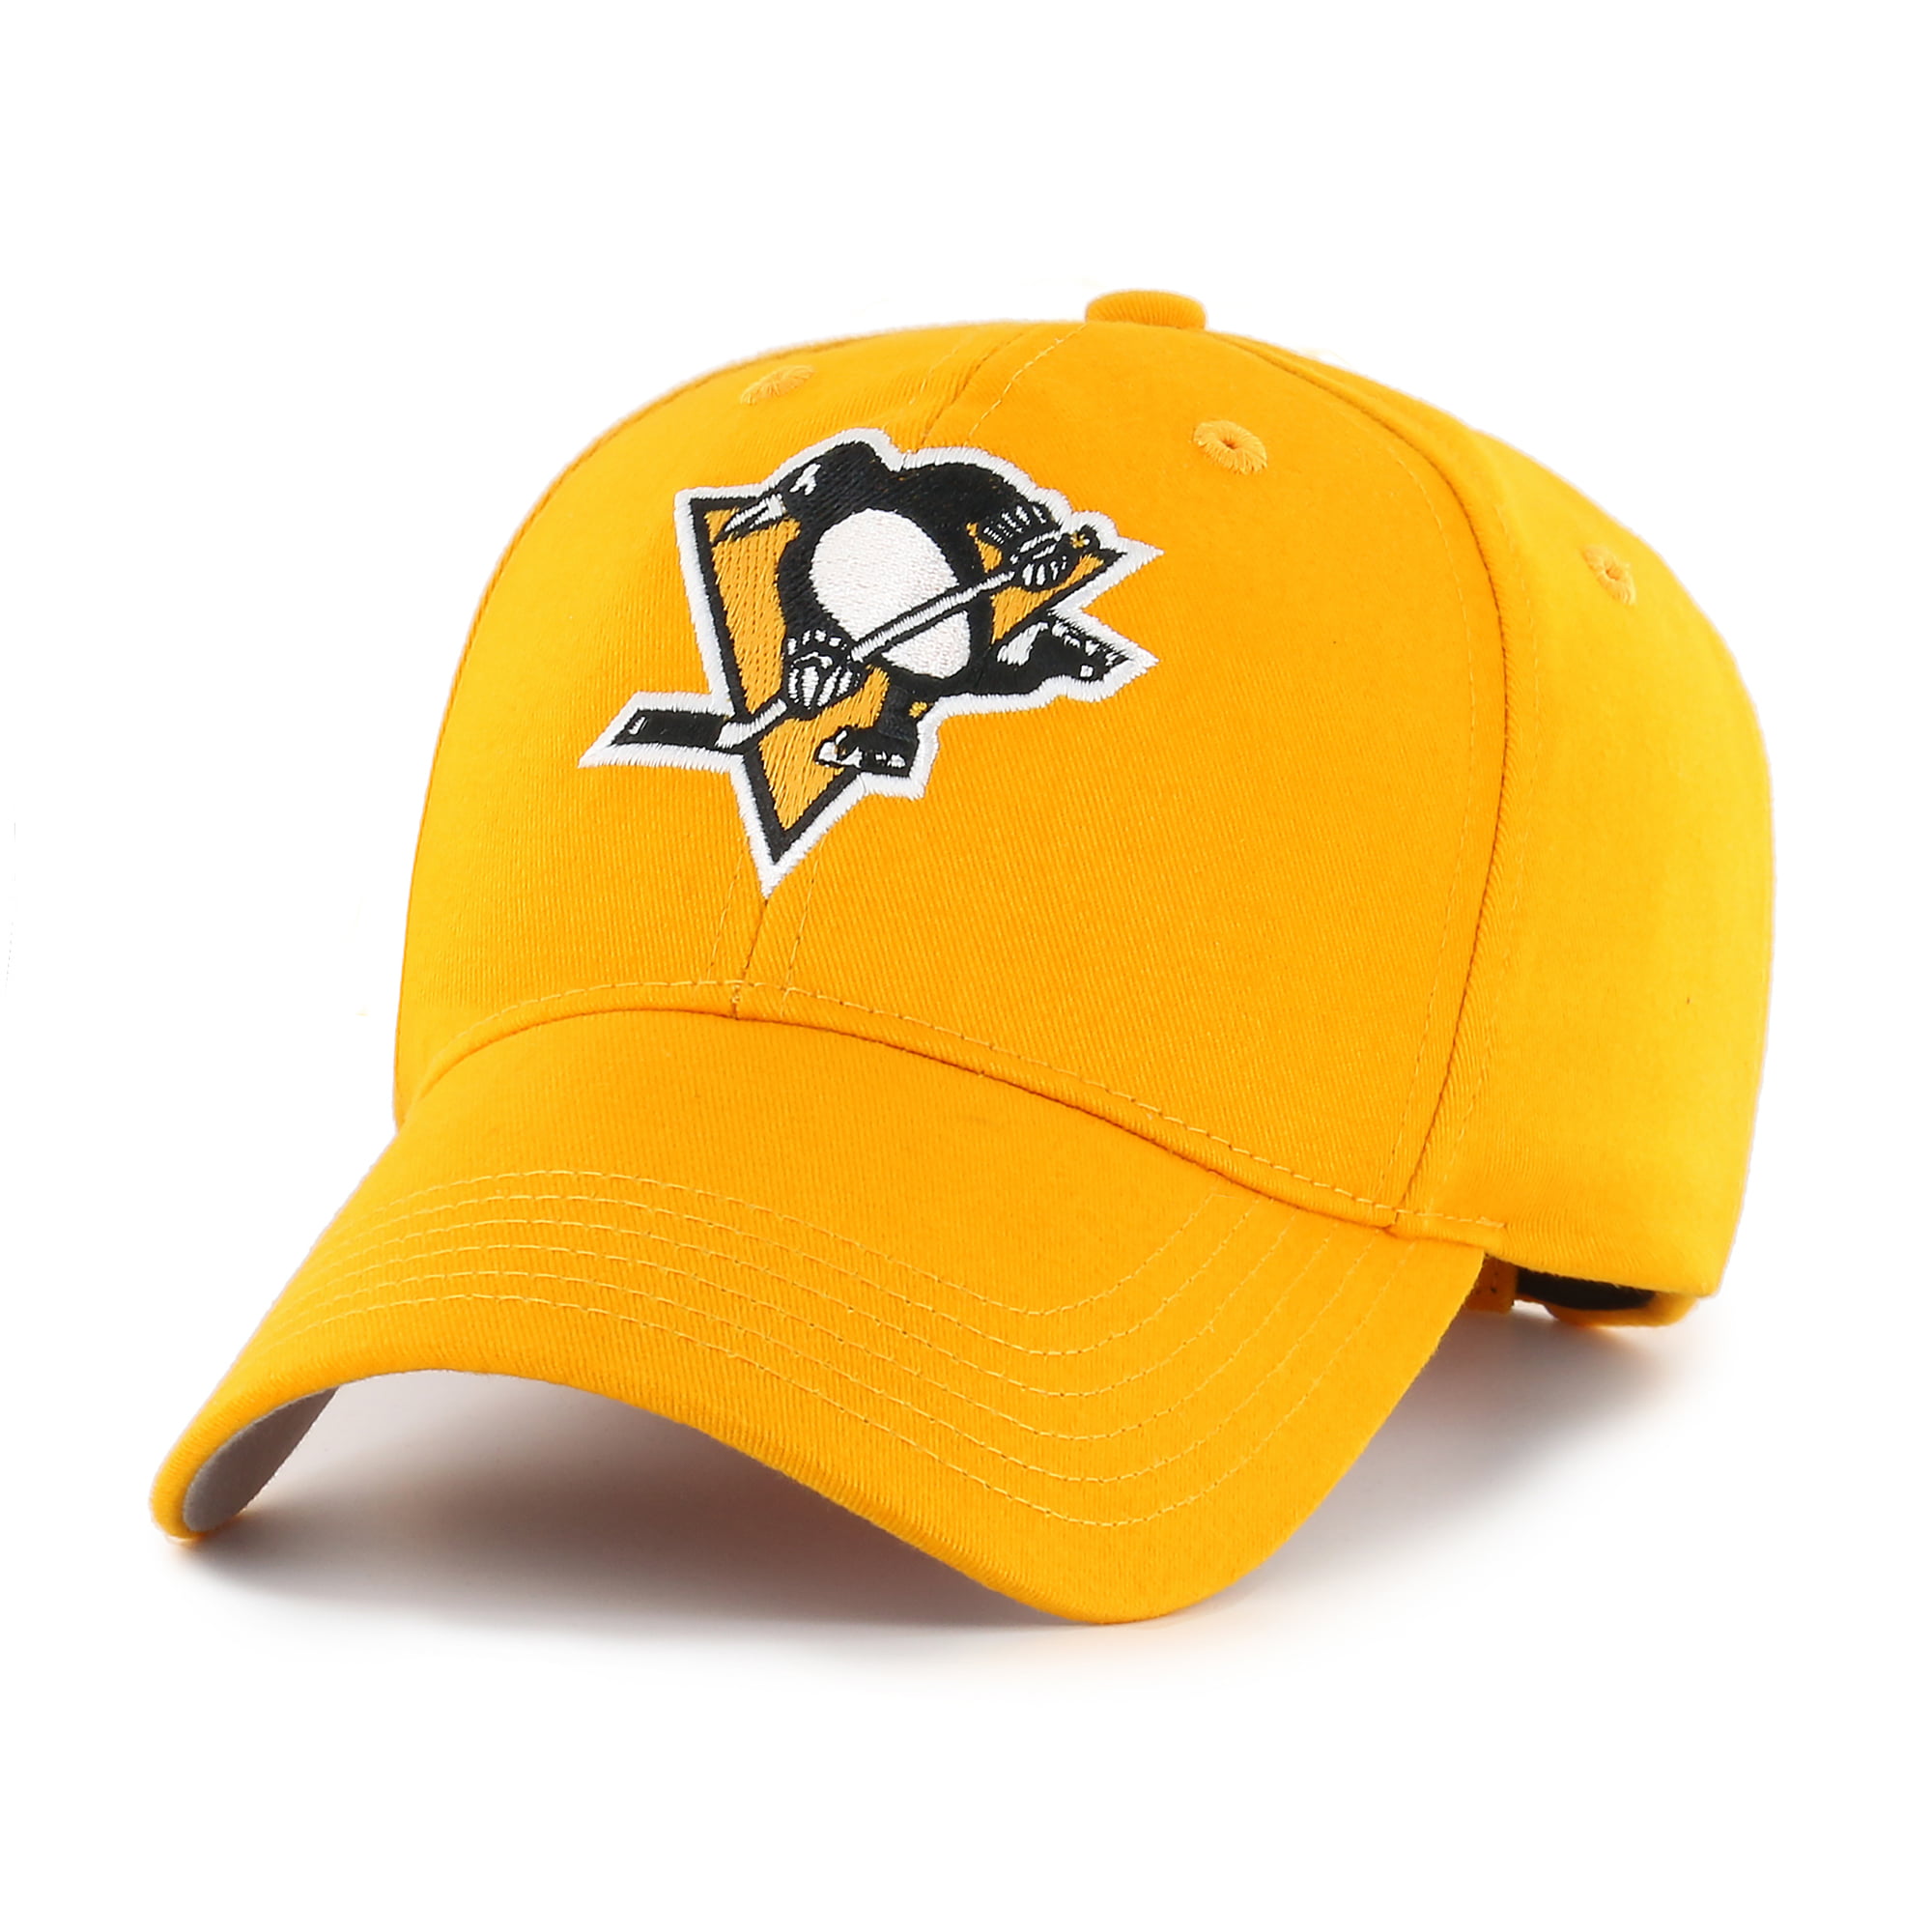 NHL Pittsburgh Penguins Basic Cap/Hat by Fan Favorite - Walmart.com